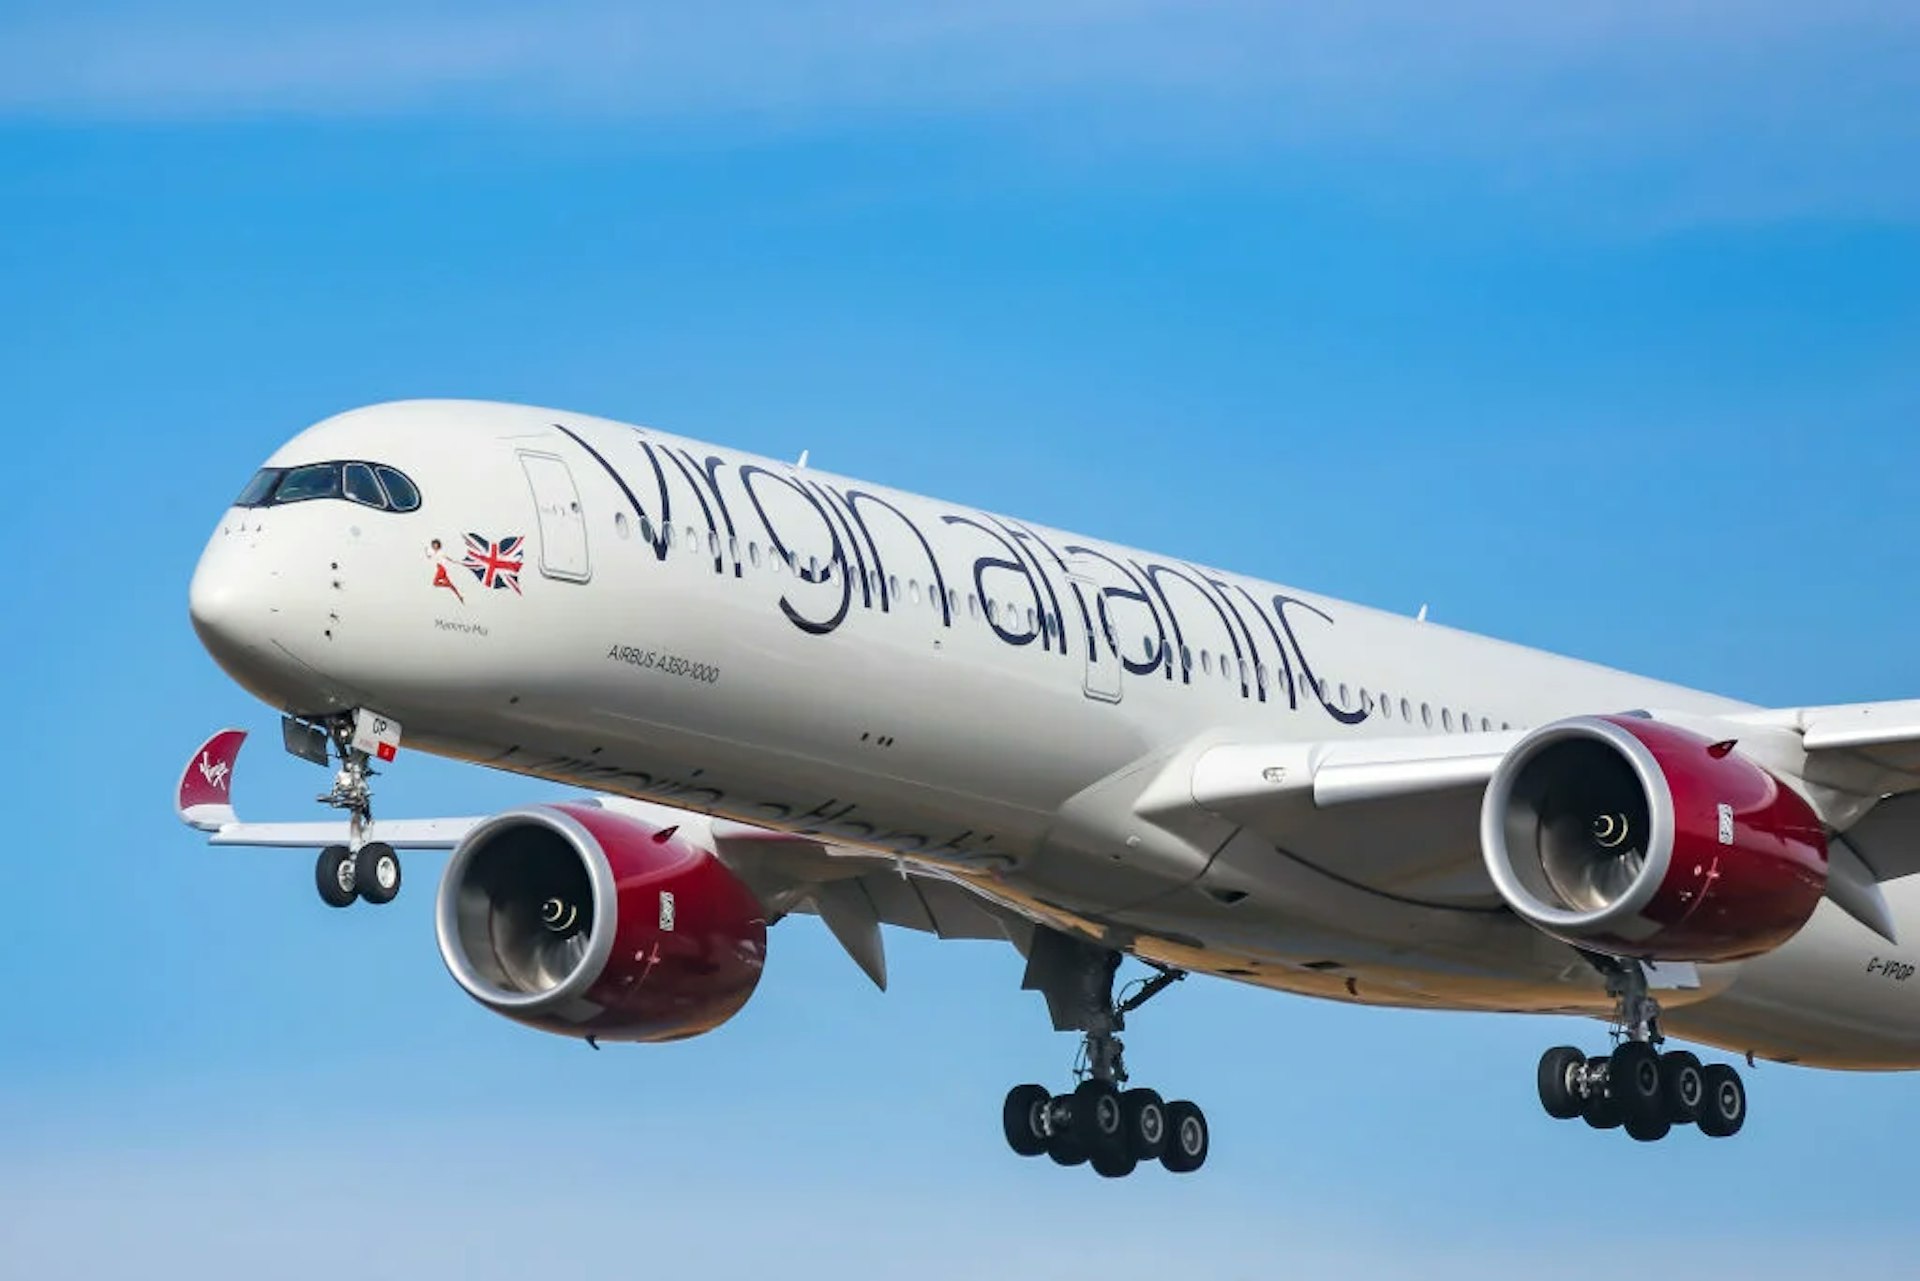 A Virgin Atlantic plane coming in for a landing